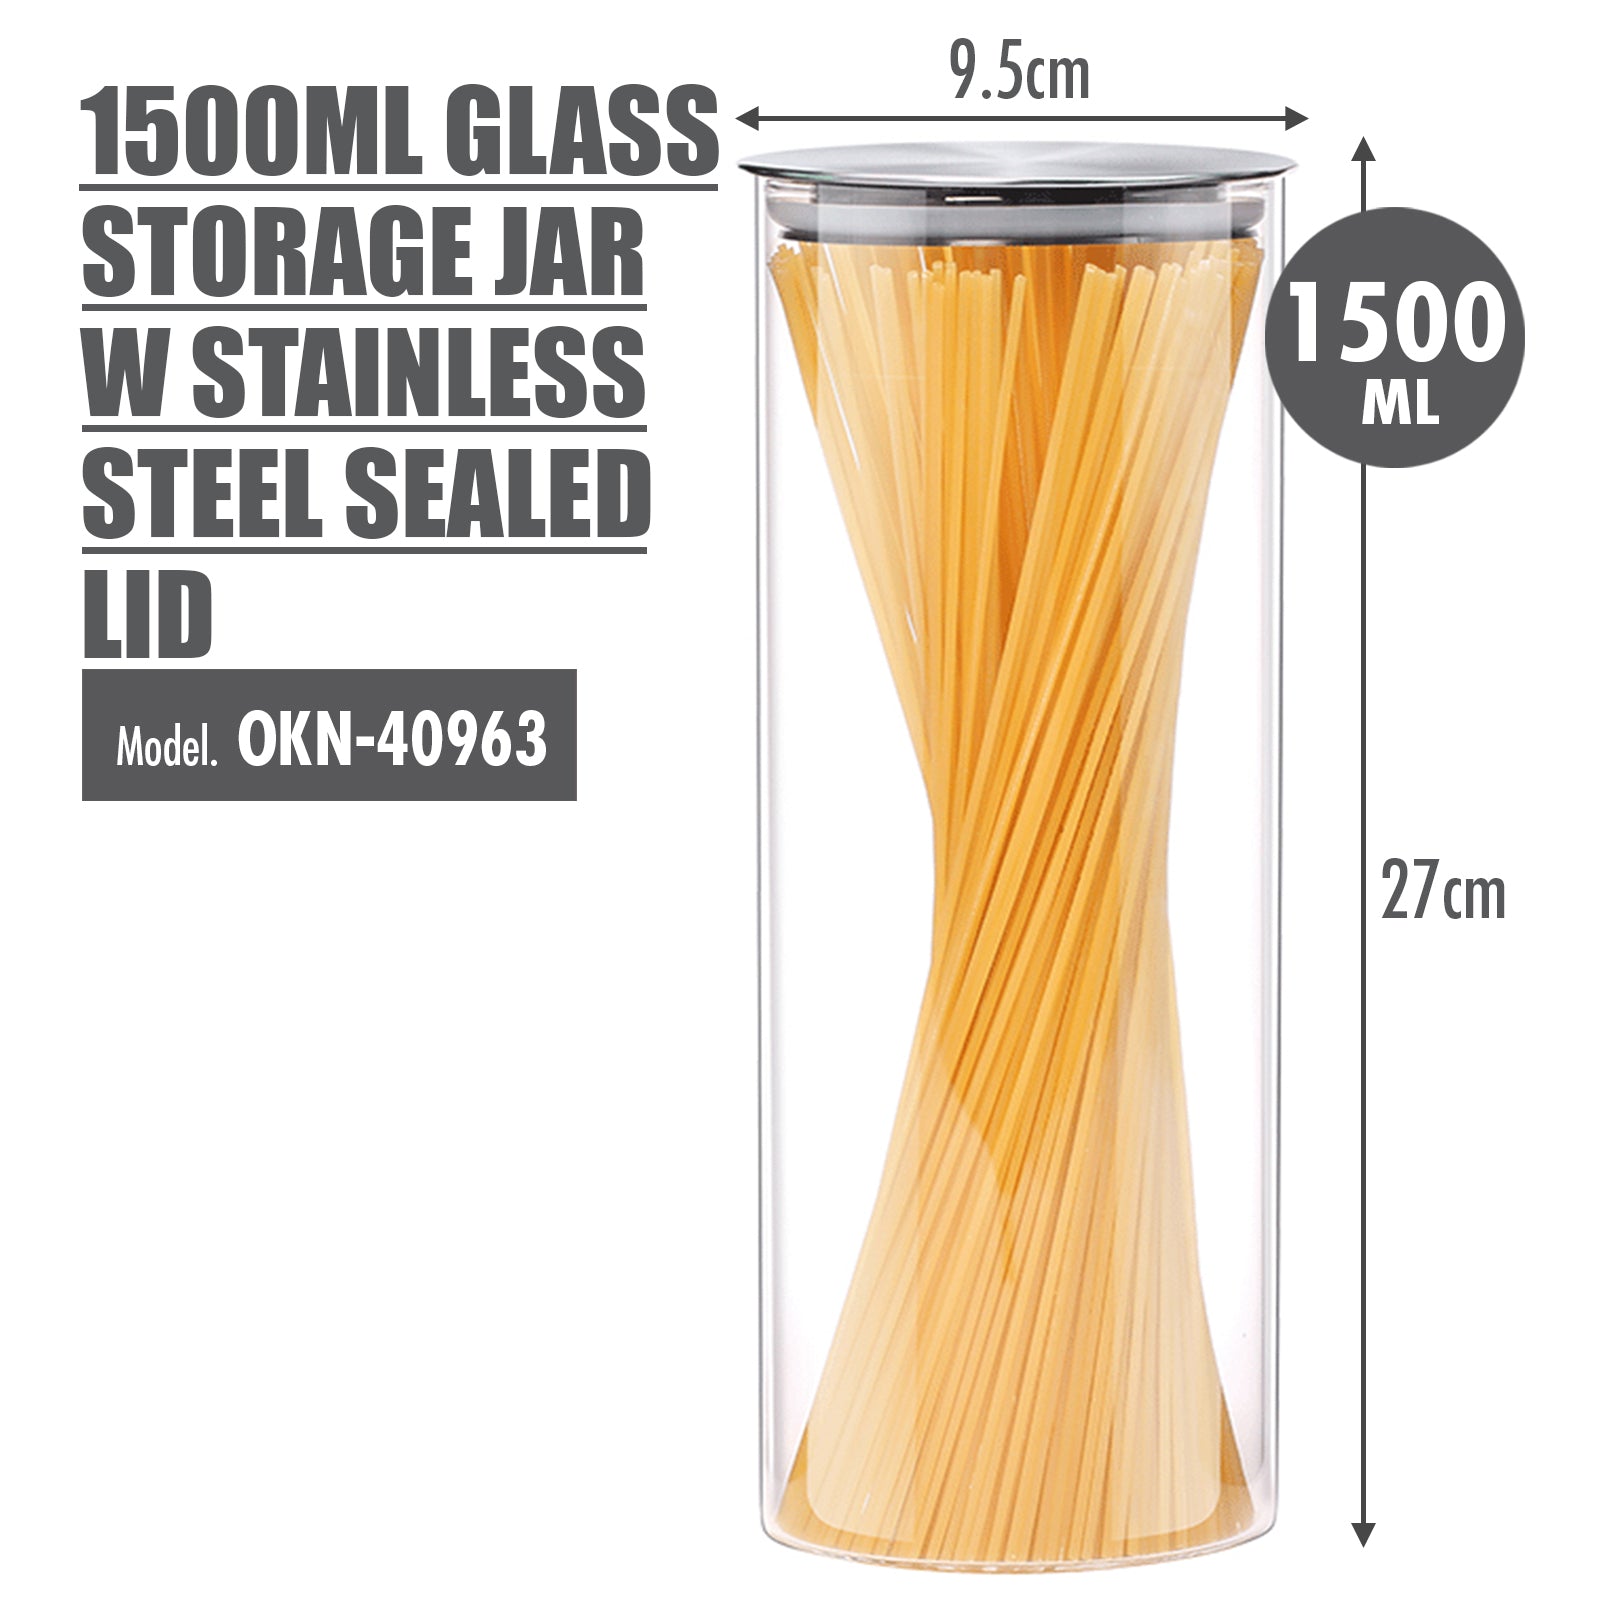 1500ml Glass Storage Jar with Stainless Steel Sealed Lid (Dia: 9.5cm)